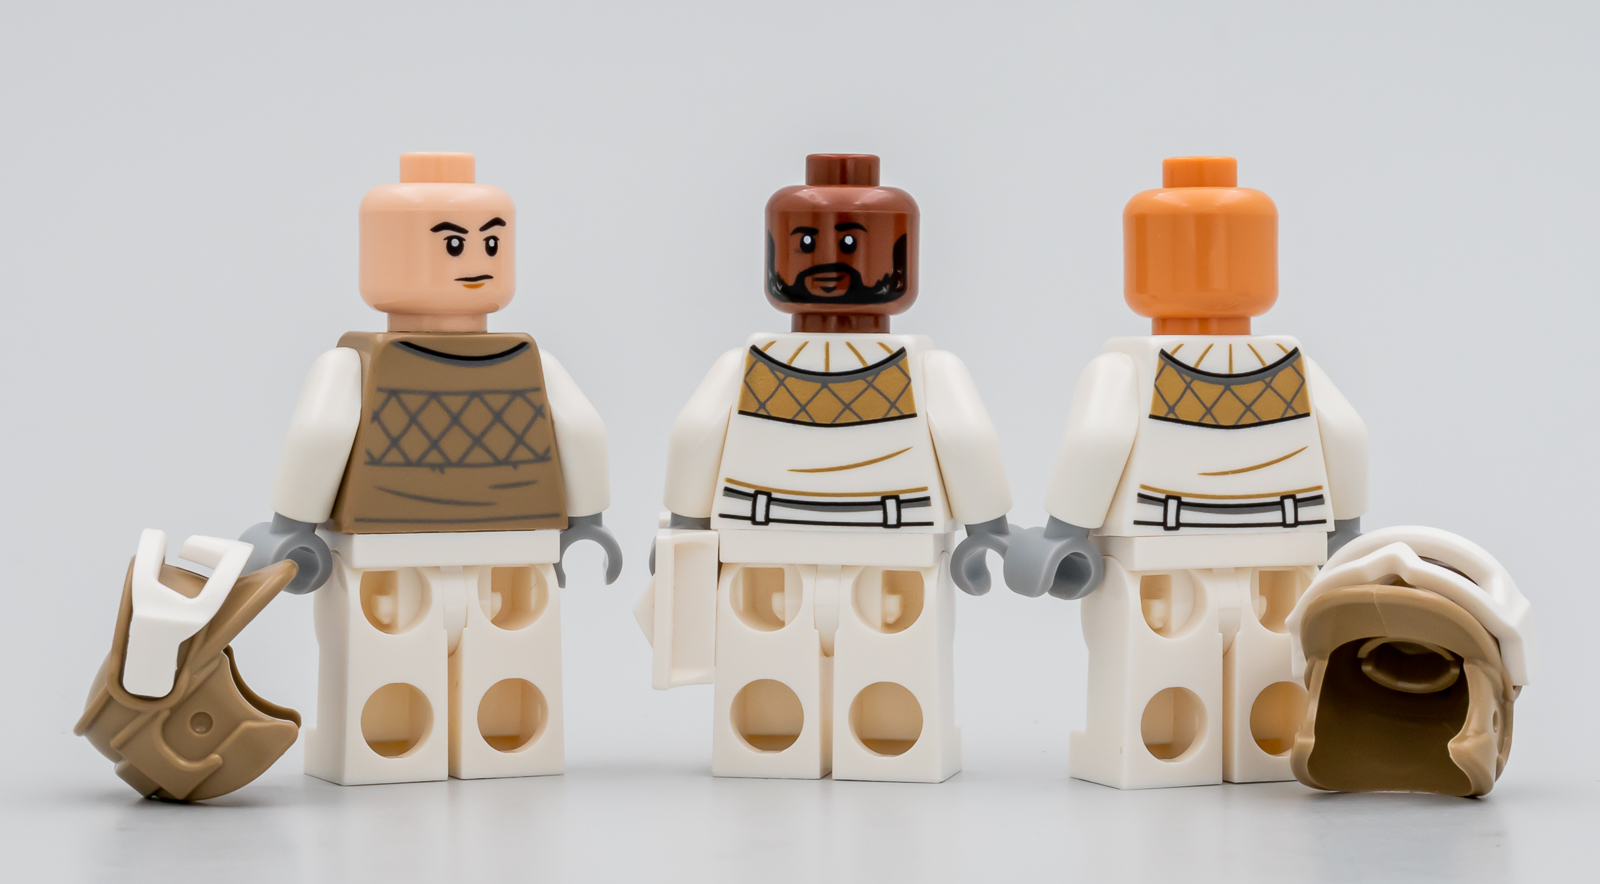 LEGO Defense of Hoth 40557